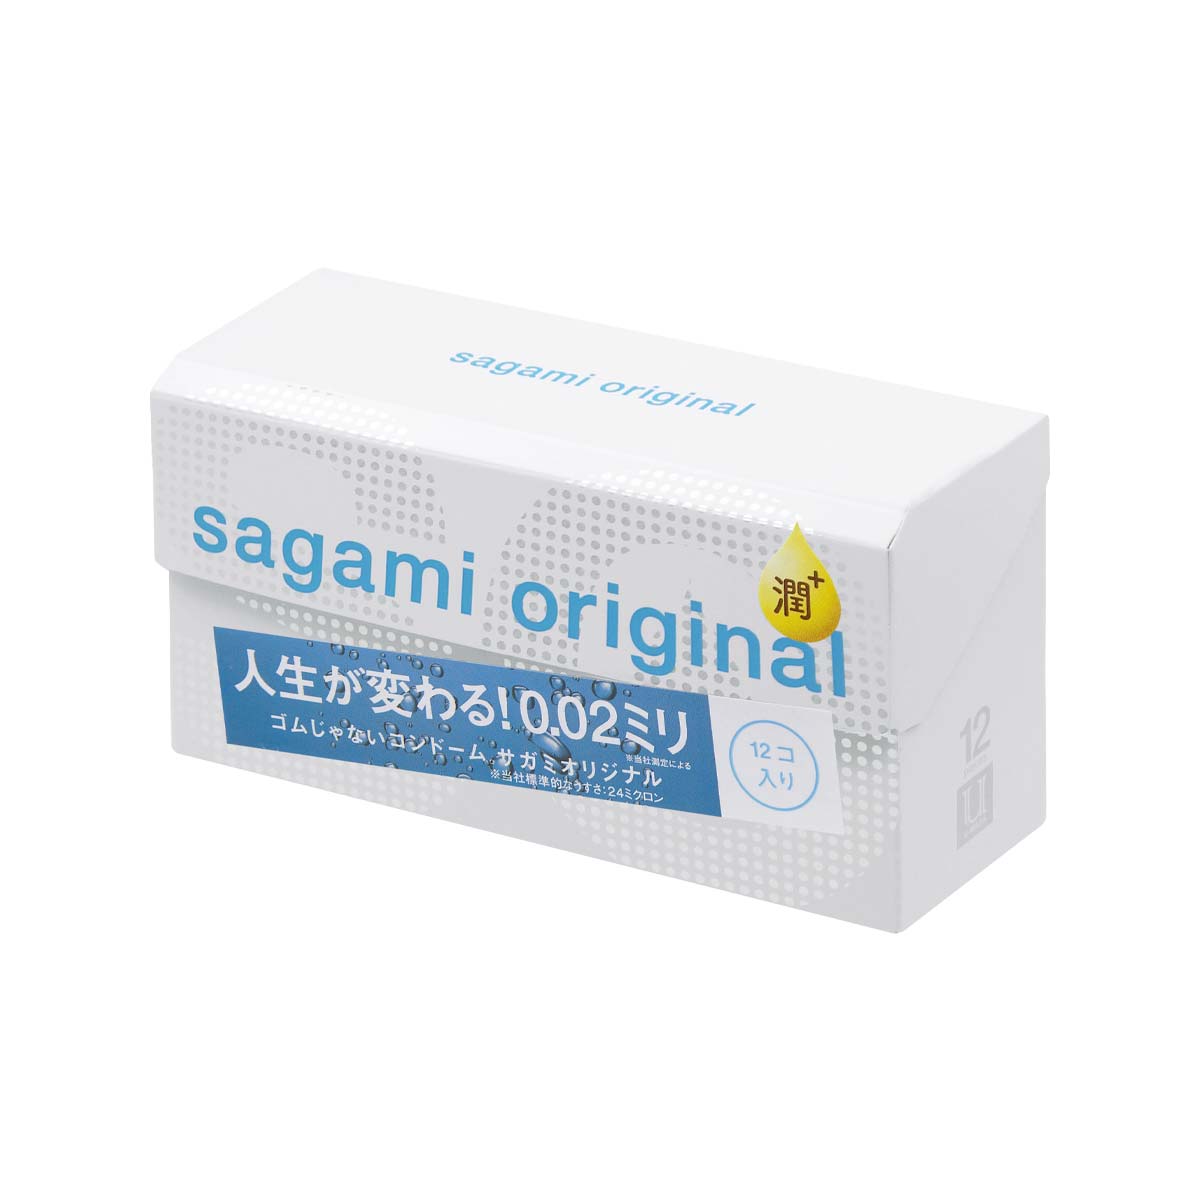 Sagami Original 0.02 Extra Lubricated 12's Pack PU Condom (Defective Packaging)-p_1